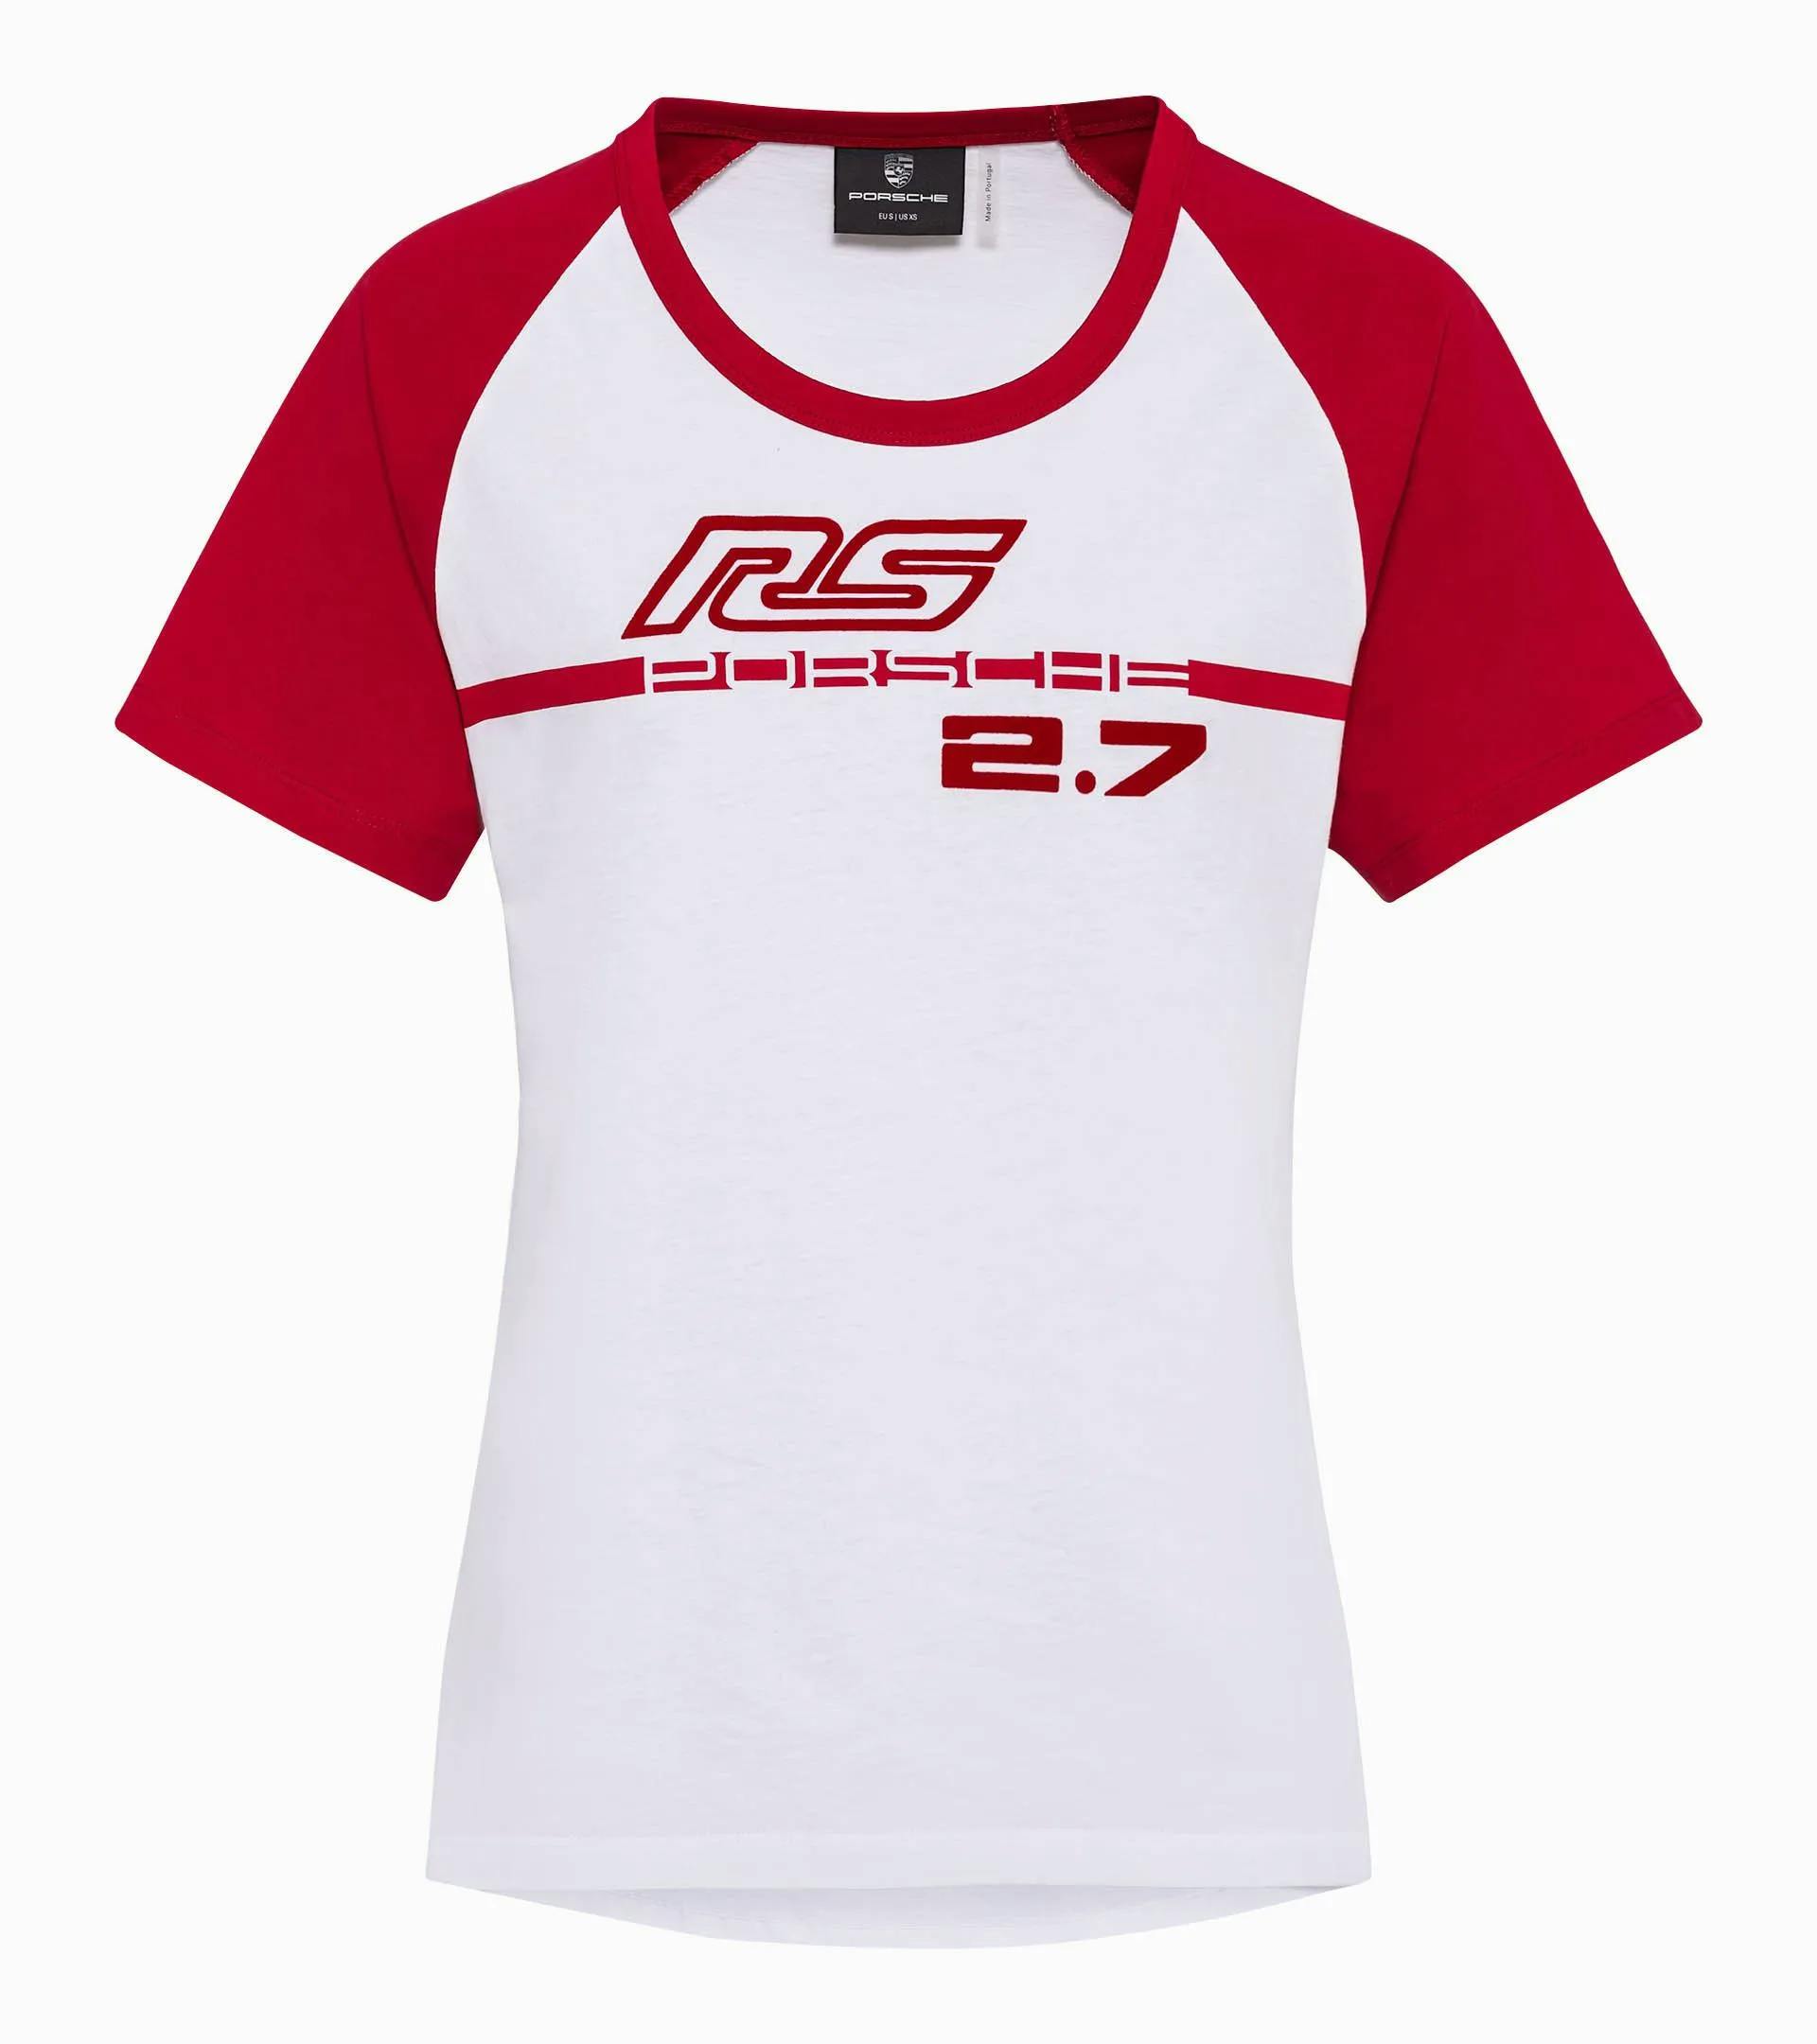 Women's T-shirt – RS 2.7 1